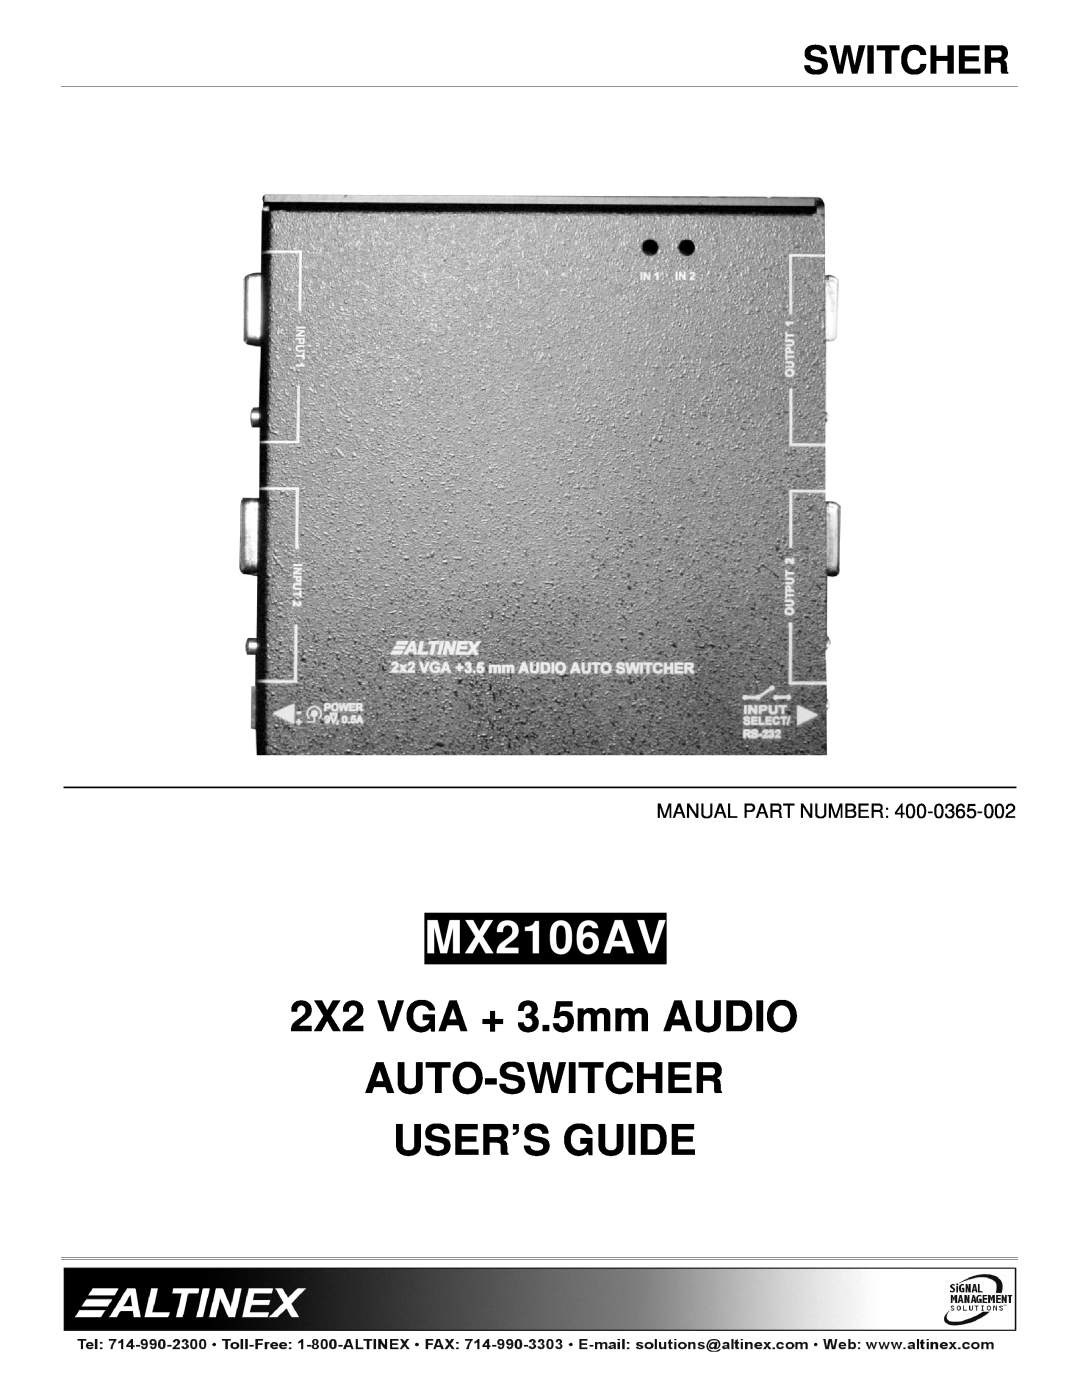 Altinex MX2106AV manual Switcher, 2X2 VGA + 3.5mm AUDIO AUTO-SWITCHER USER’S GUIDE 